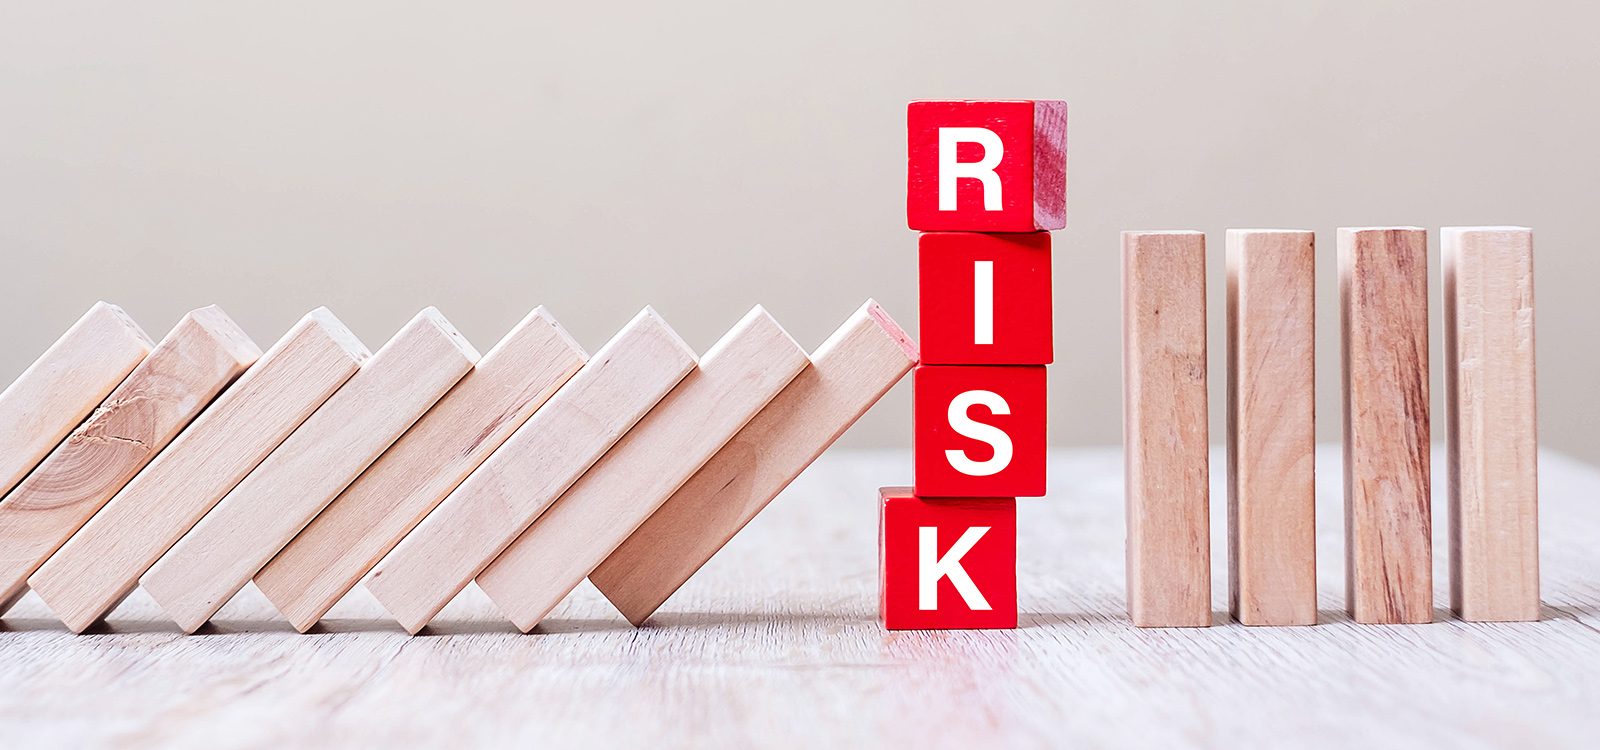 Introducing Enterprise Risk Management